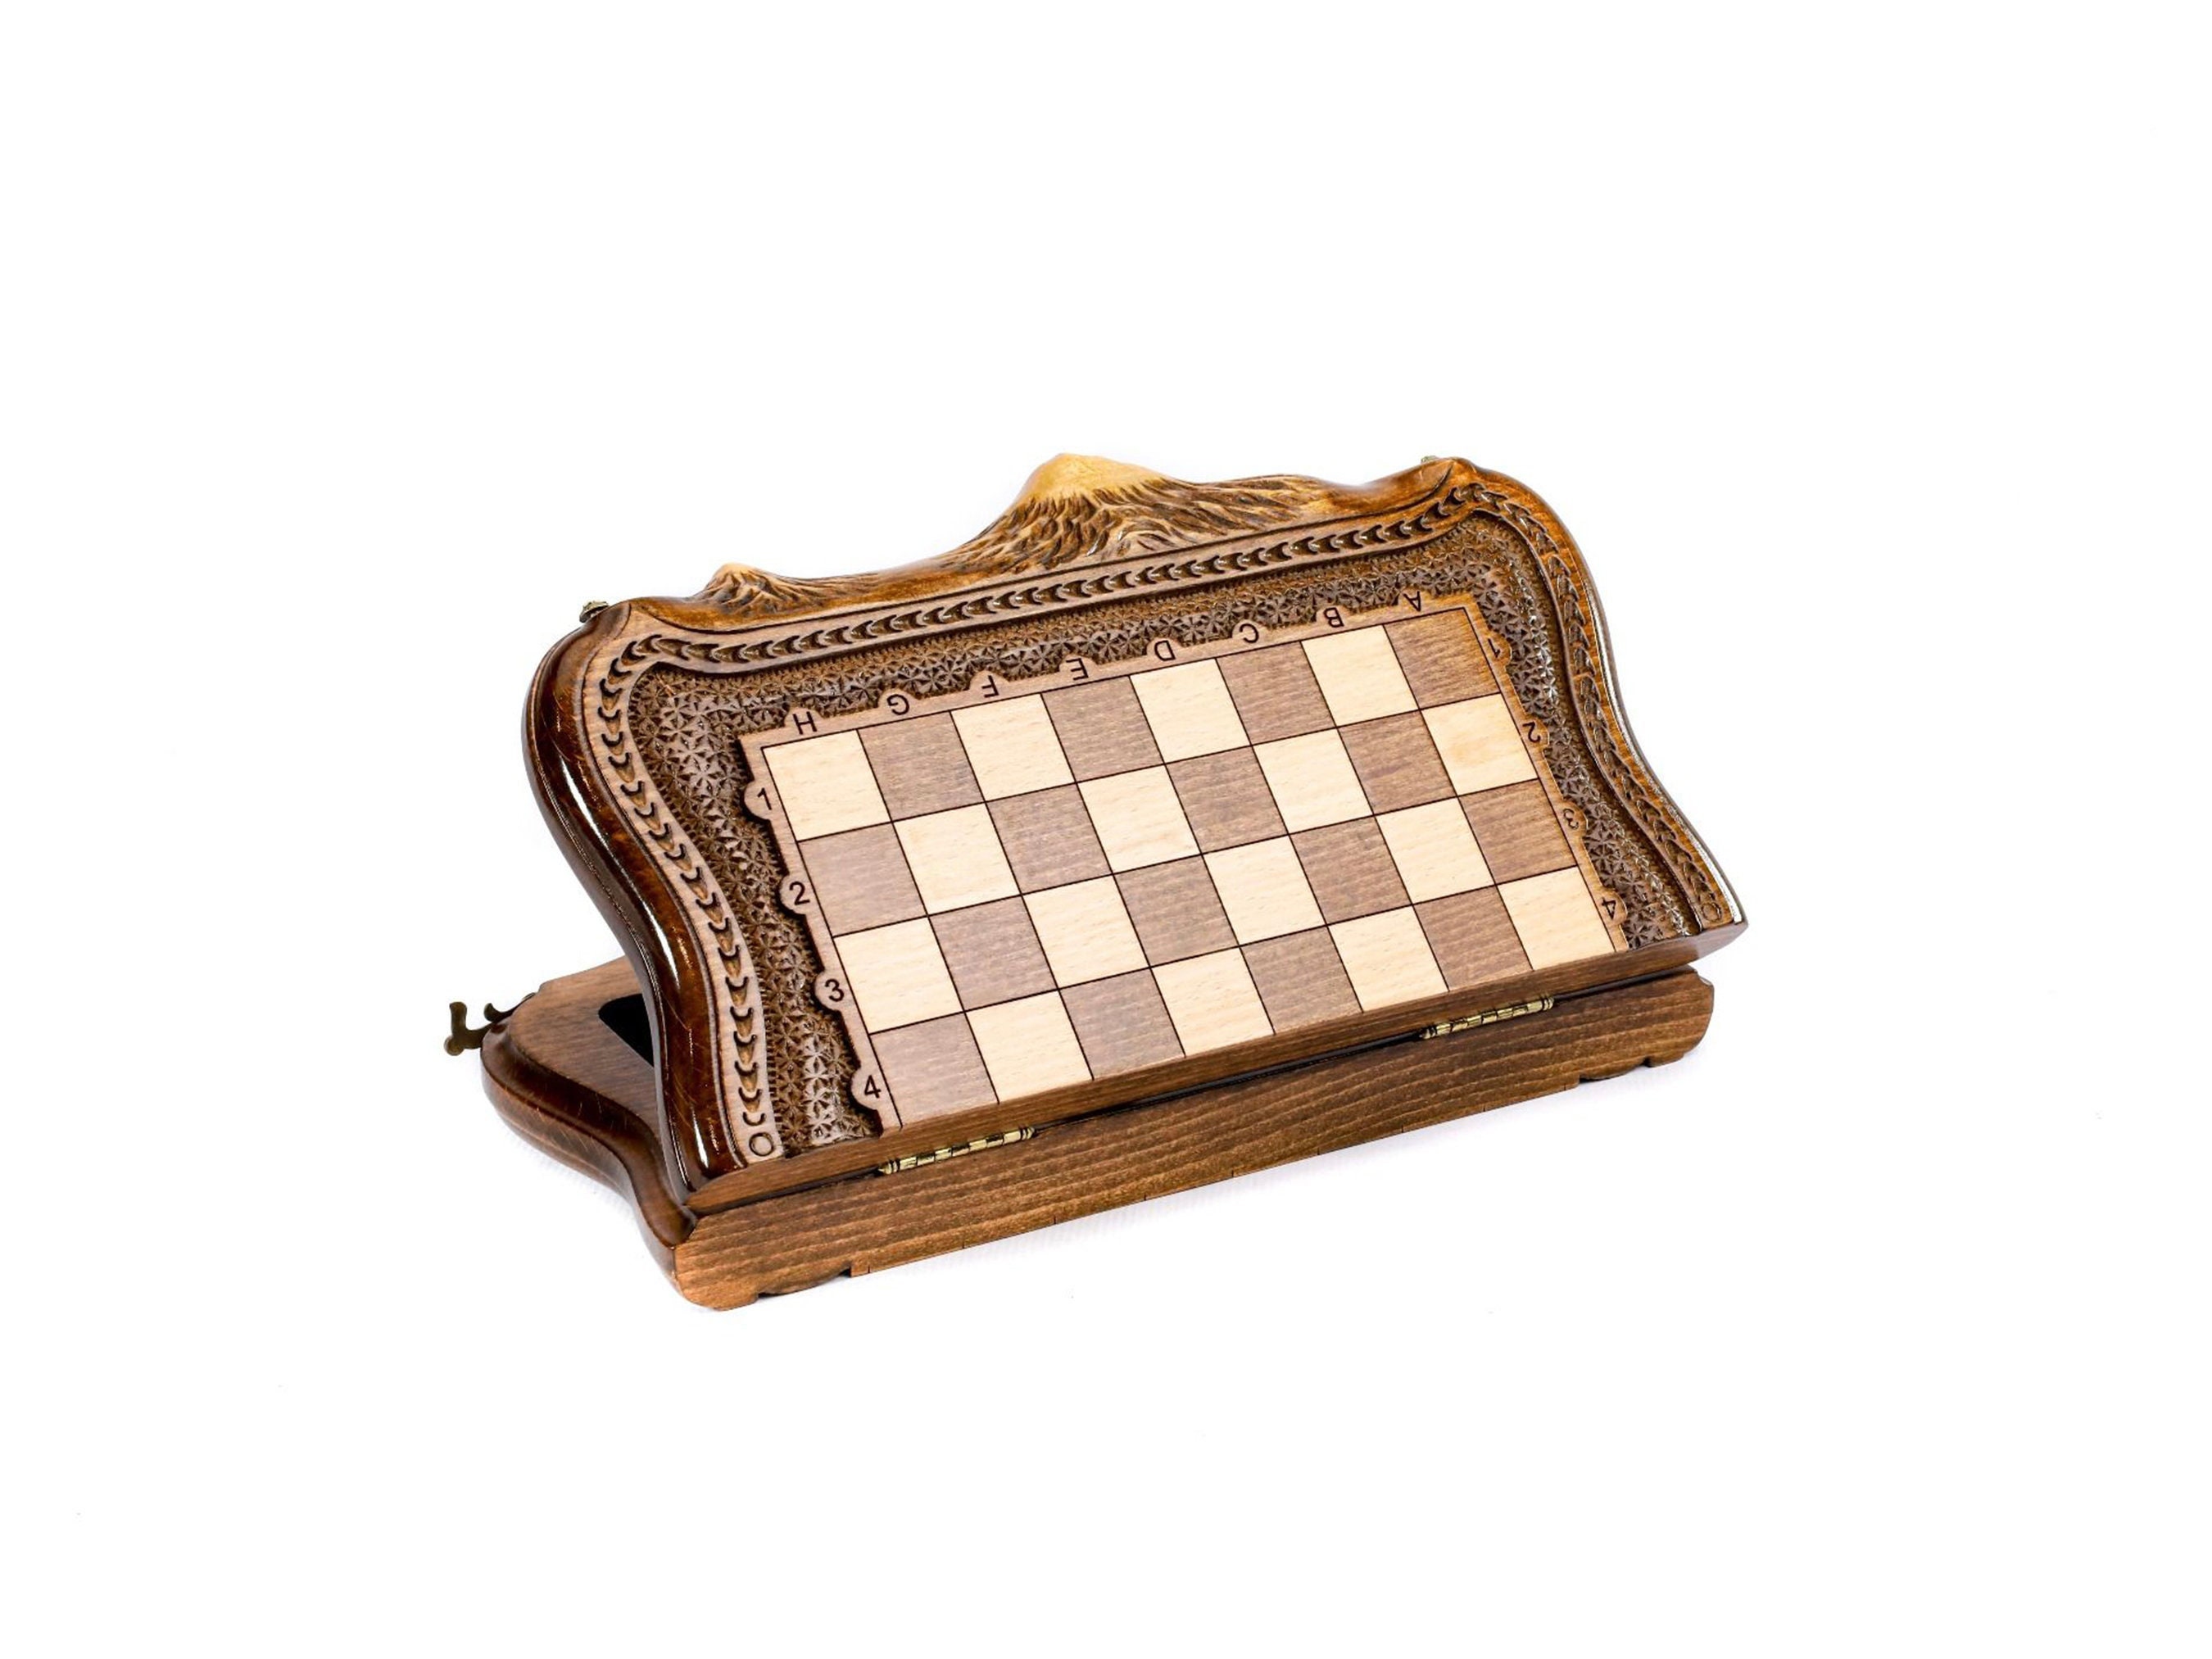 Louis Vuitton Chess Set